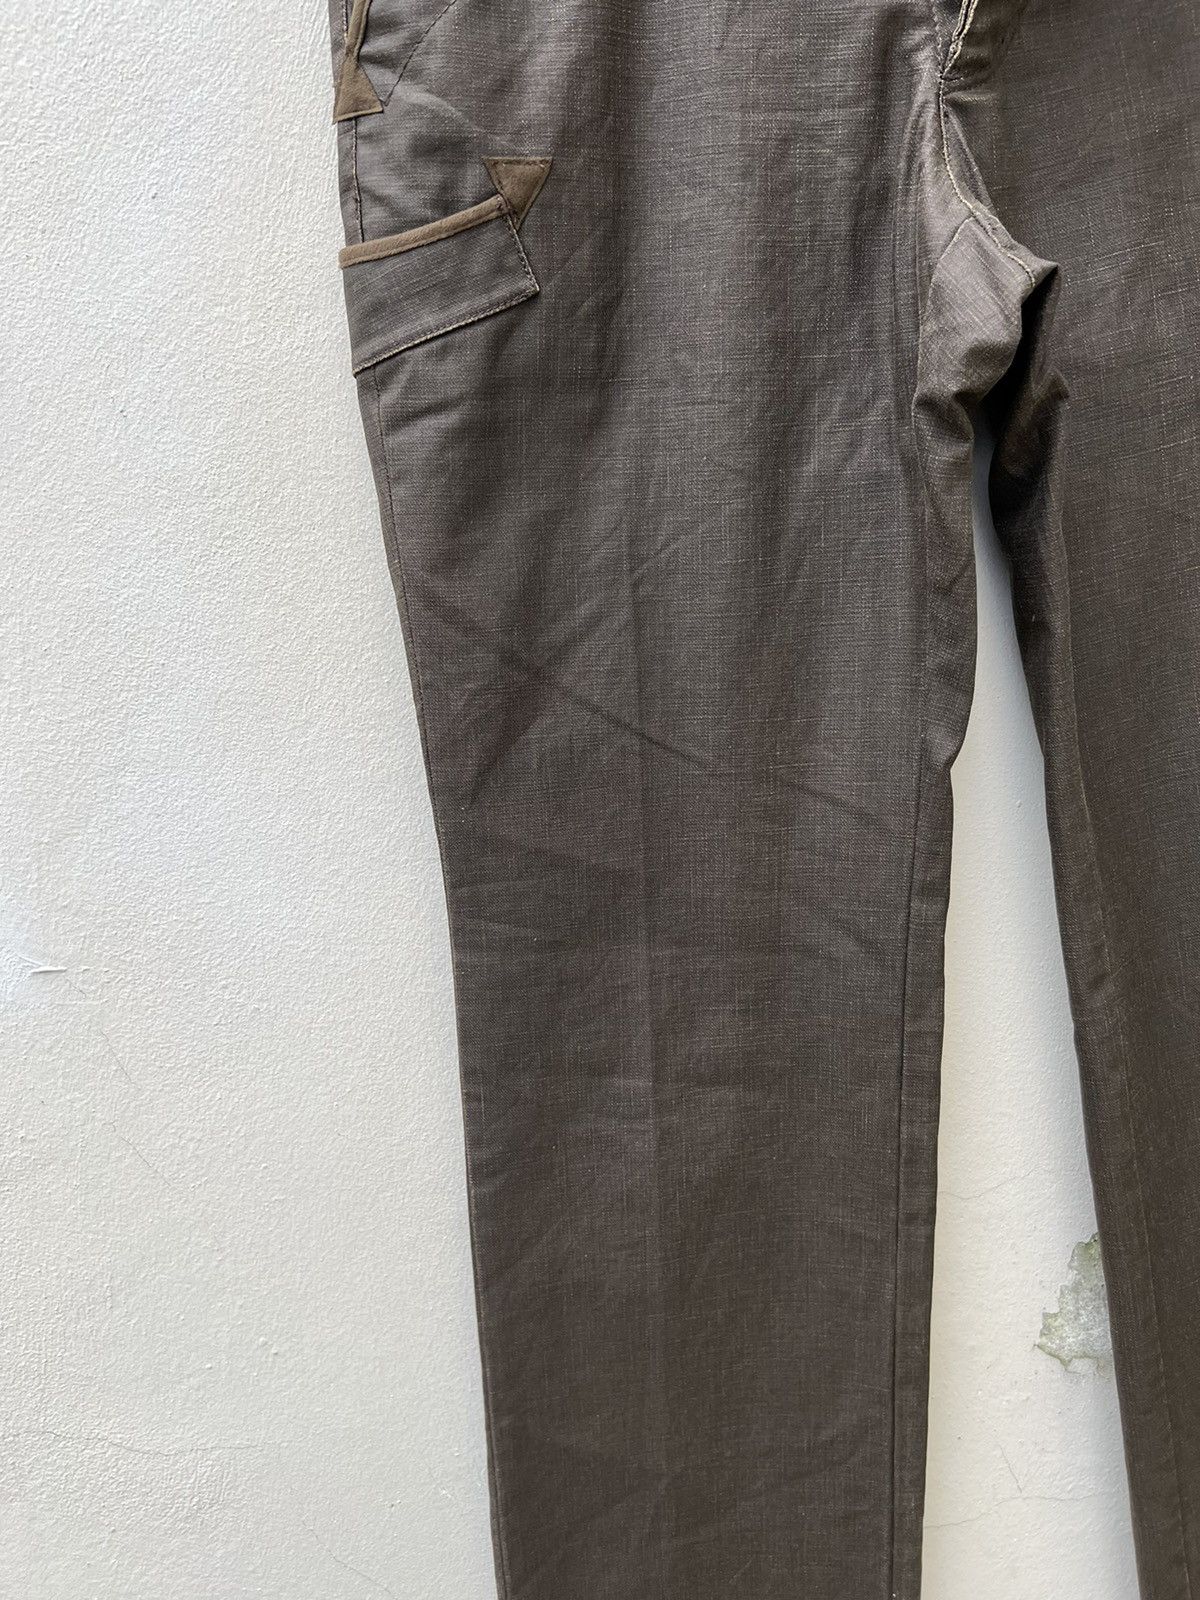 Matsuda Vintage MONSIEUR NICOLE Japan Waxed Westerner Pant Size US 30 / EU 46 - 6 Thumbnail